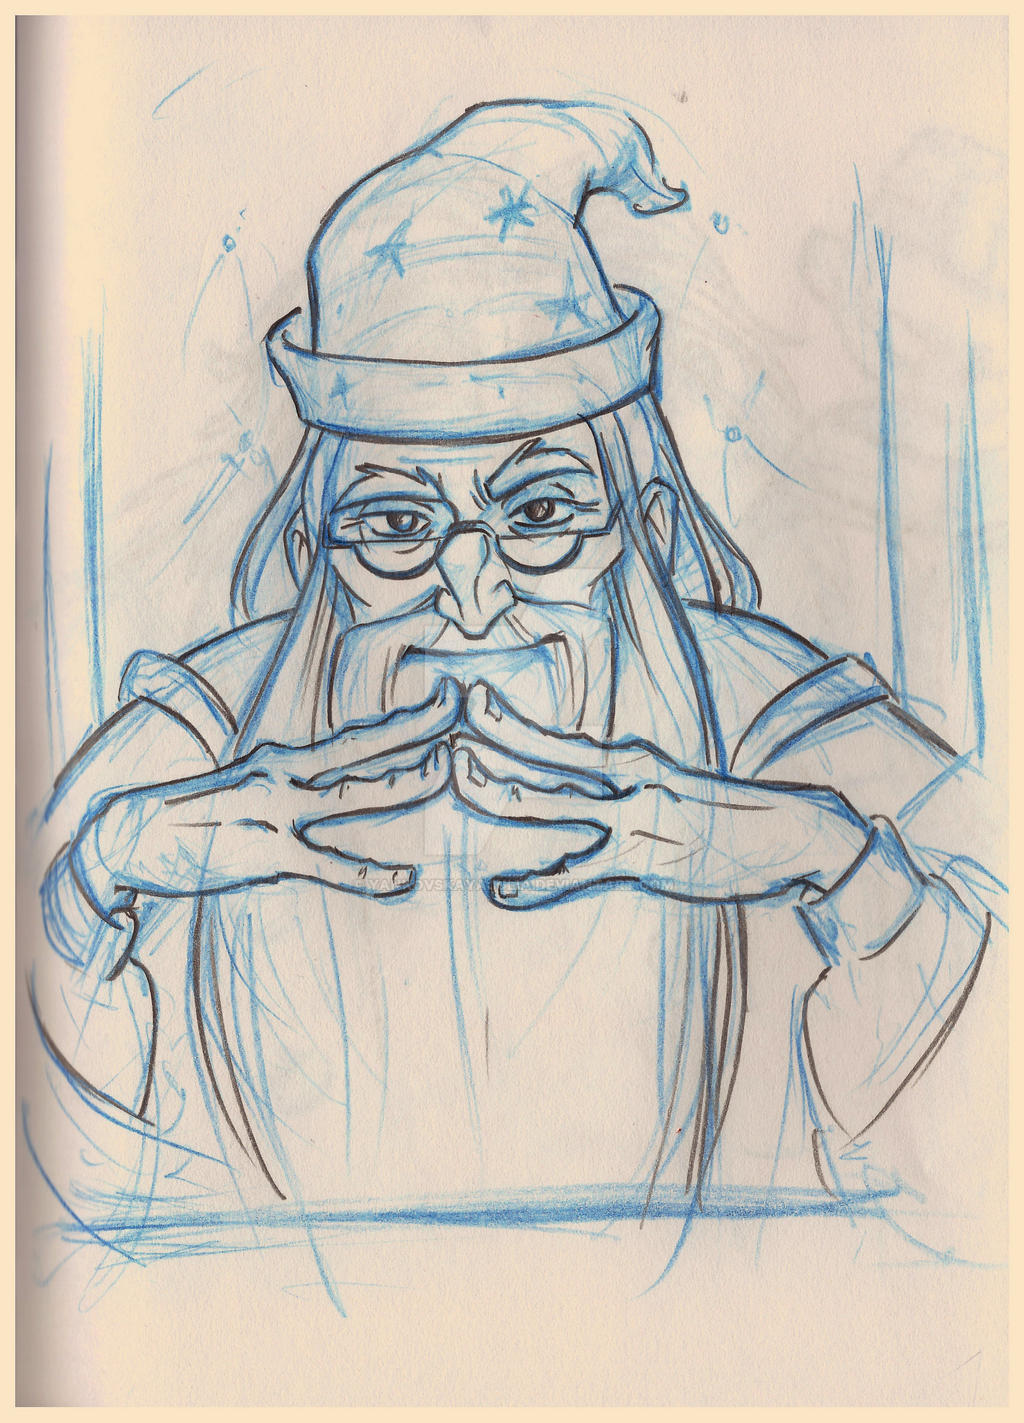 #Harrypotter. #sketches. Dumbledore